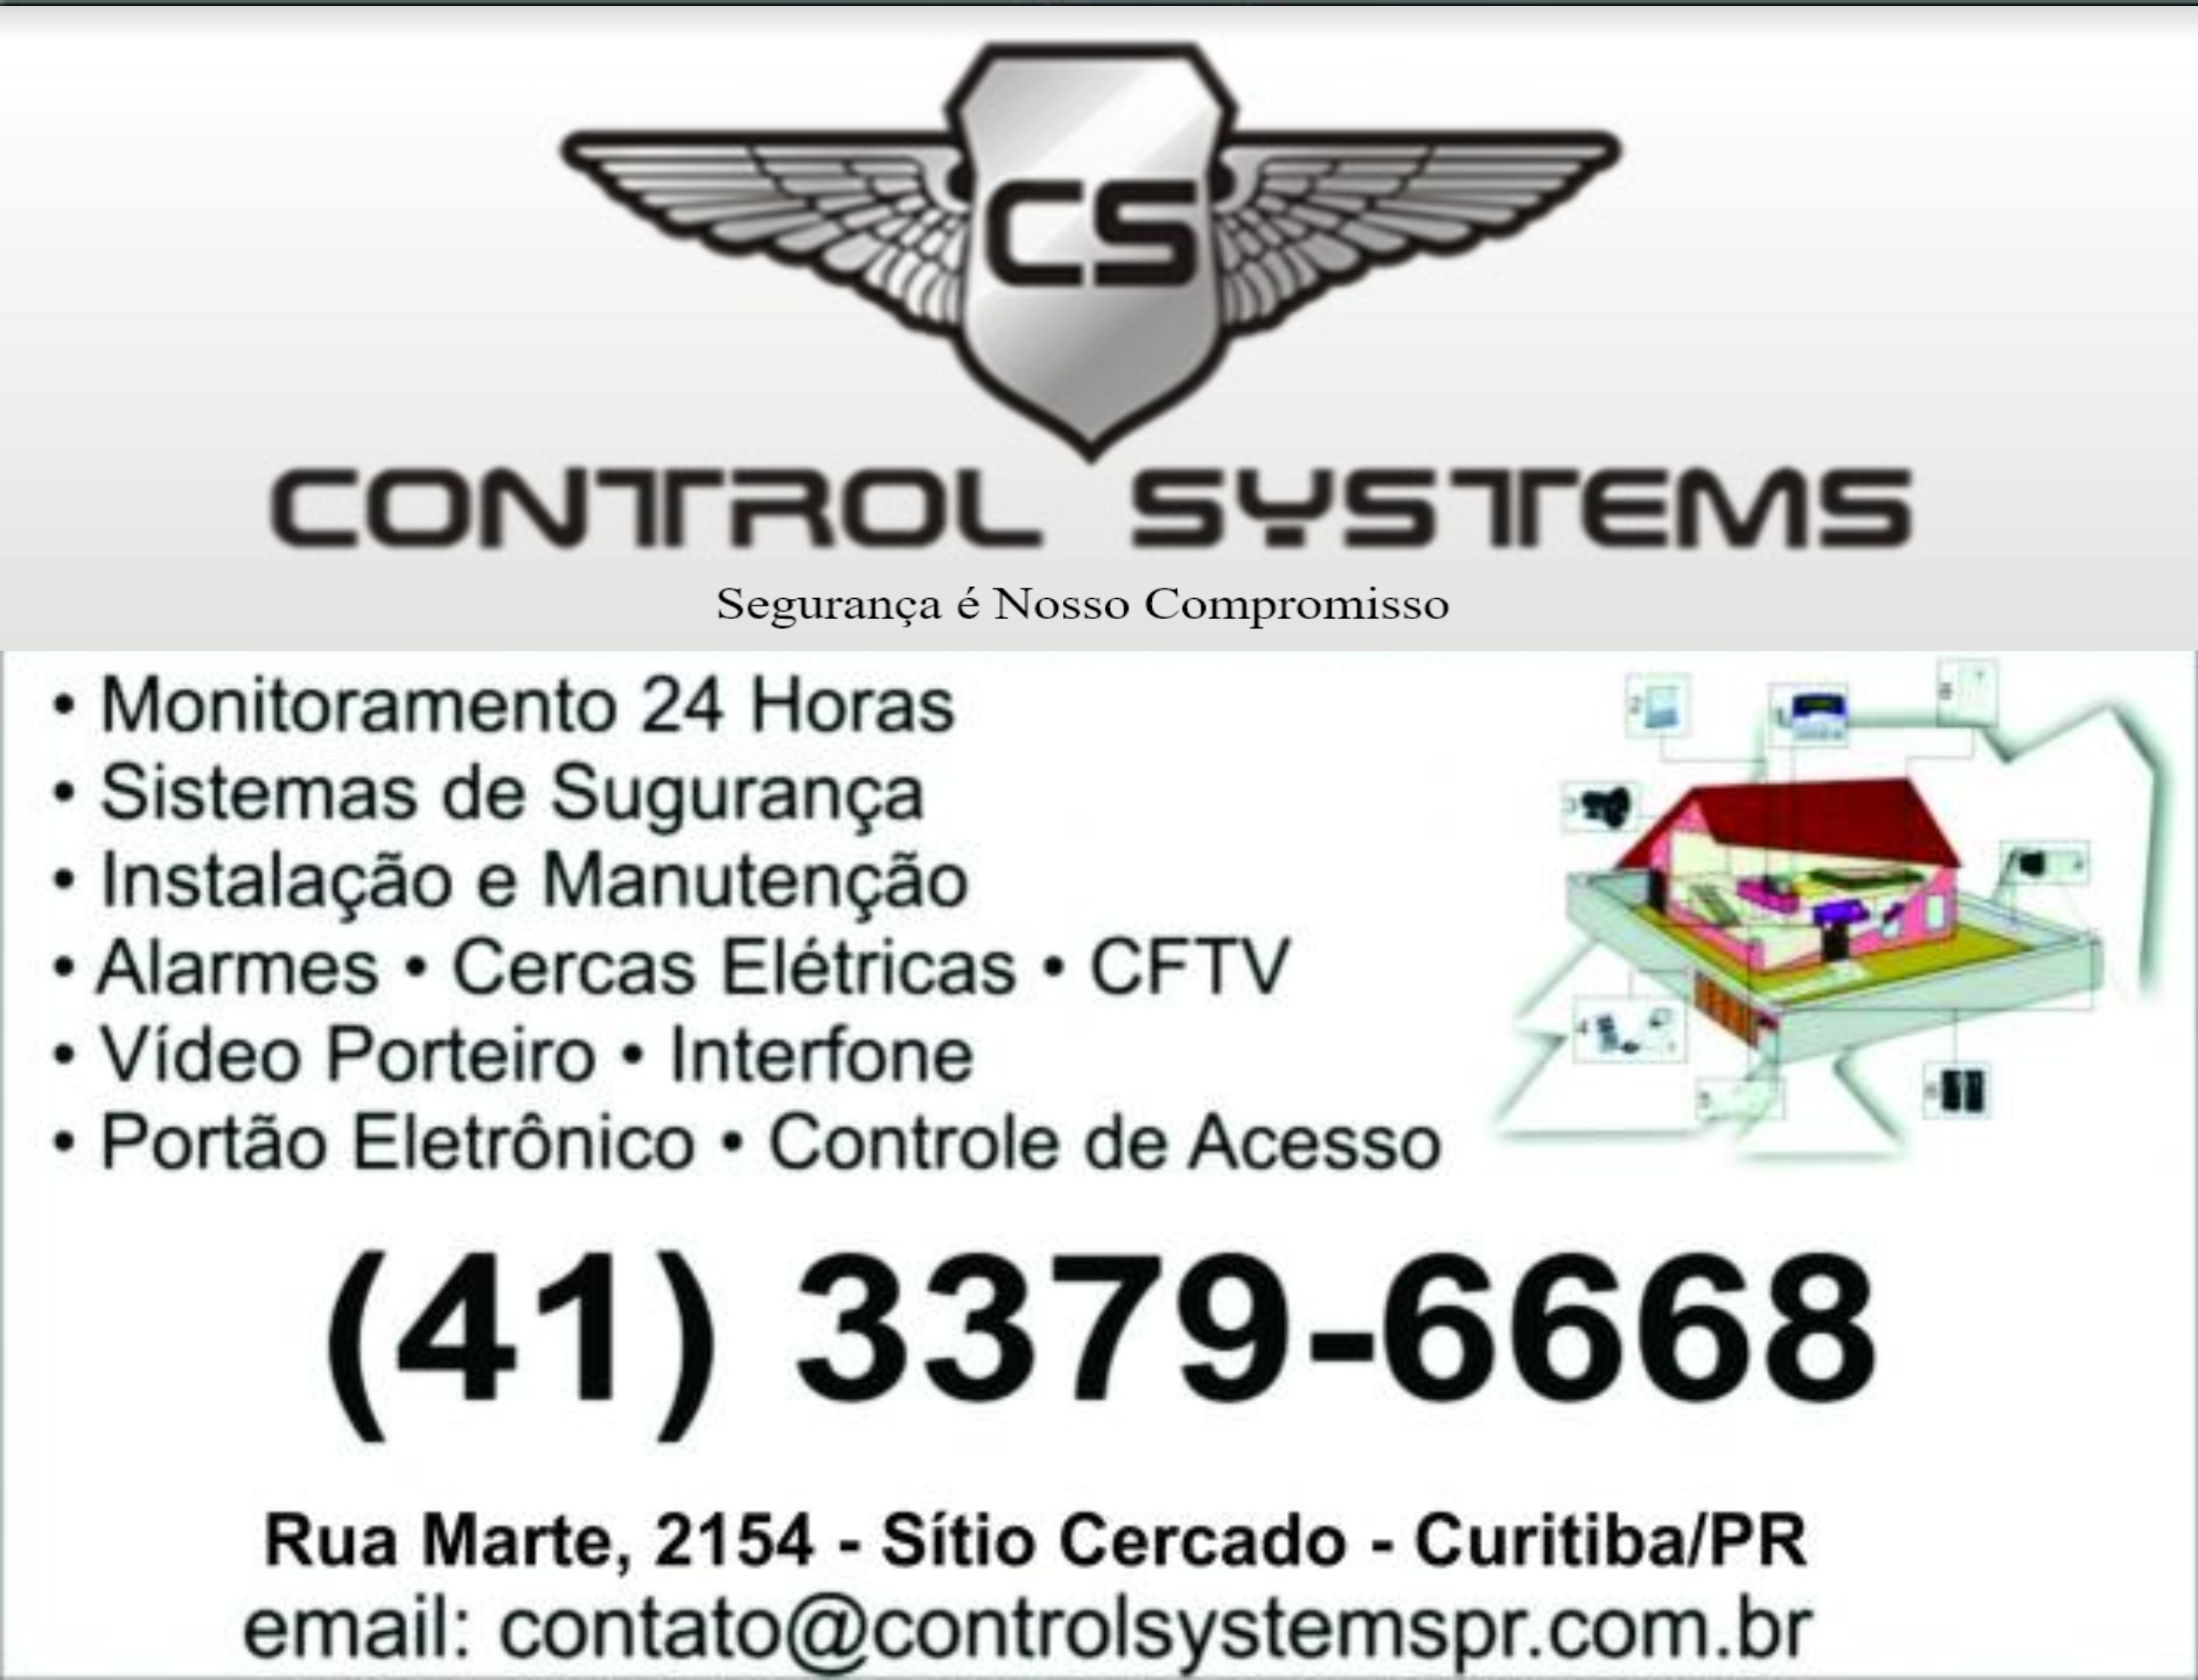 CS Control Systems       RUA MARTE, 2154, CURITIBA - PR  Fones: (41) 3379-6668 /